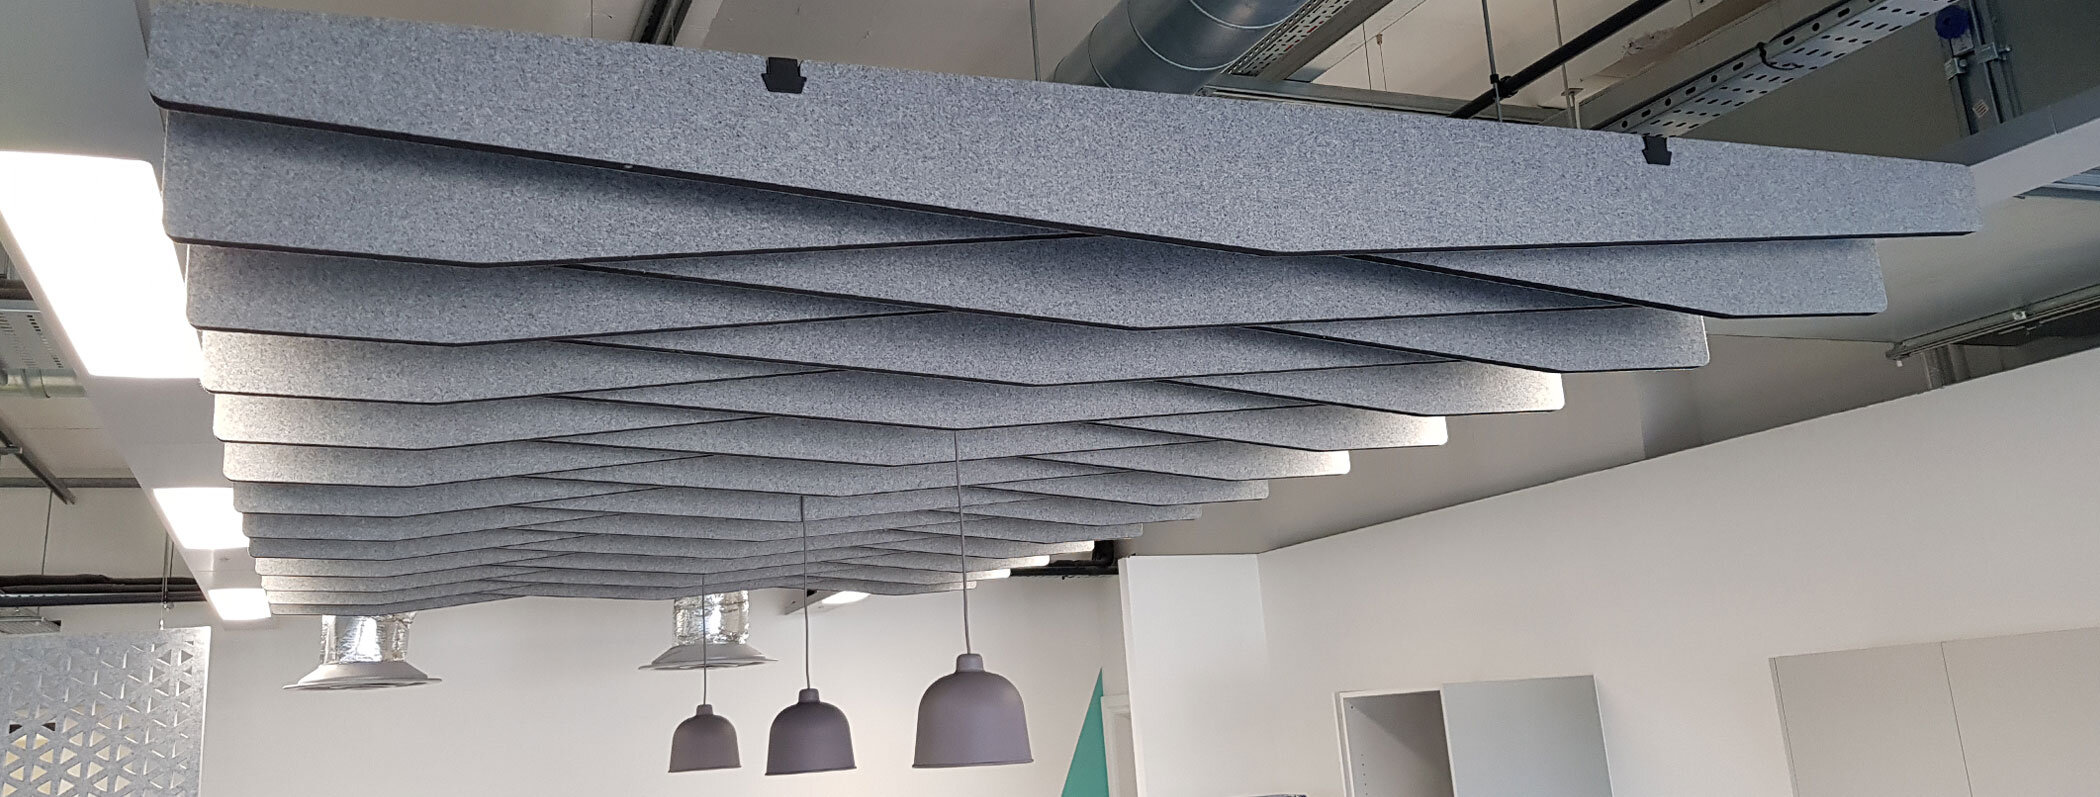   We understand office acoustics  